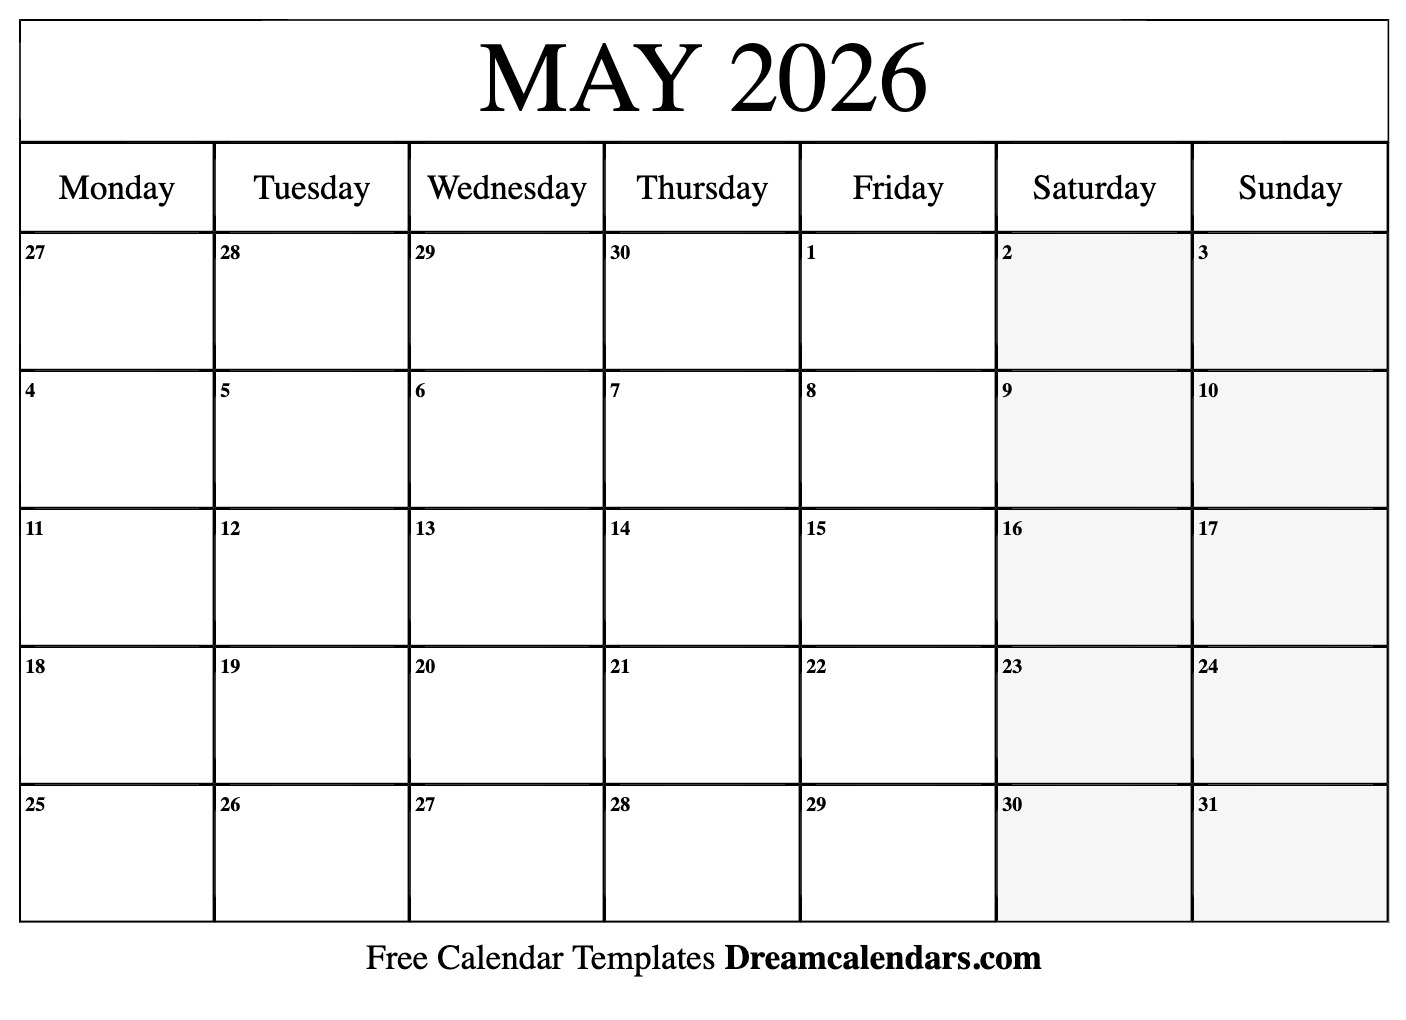 may-2026-calendar-free-blank-printable-with-holidays